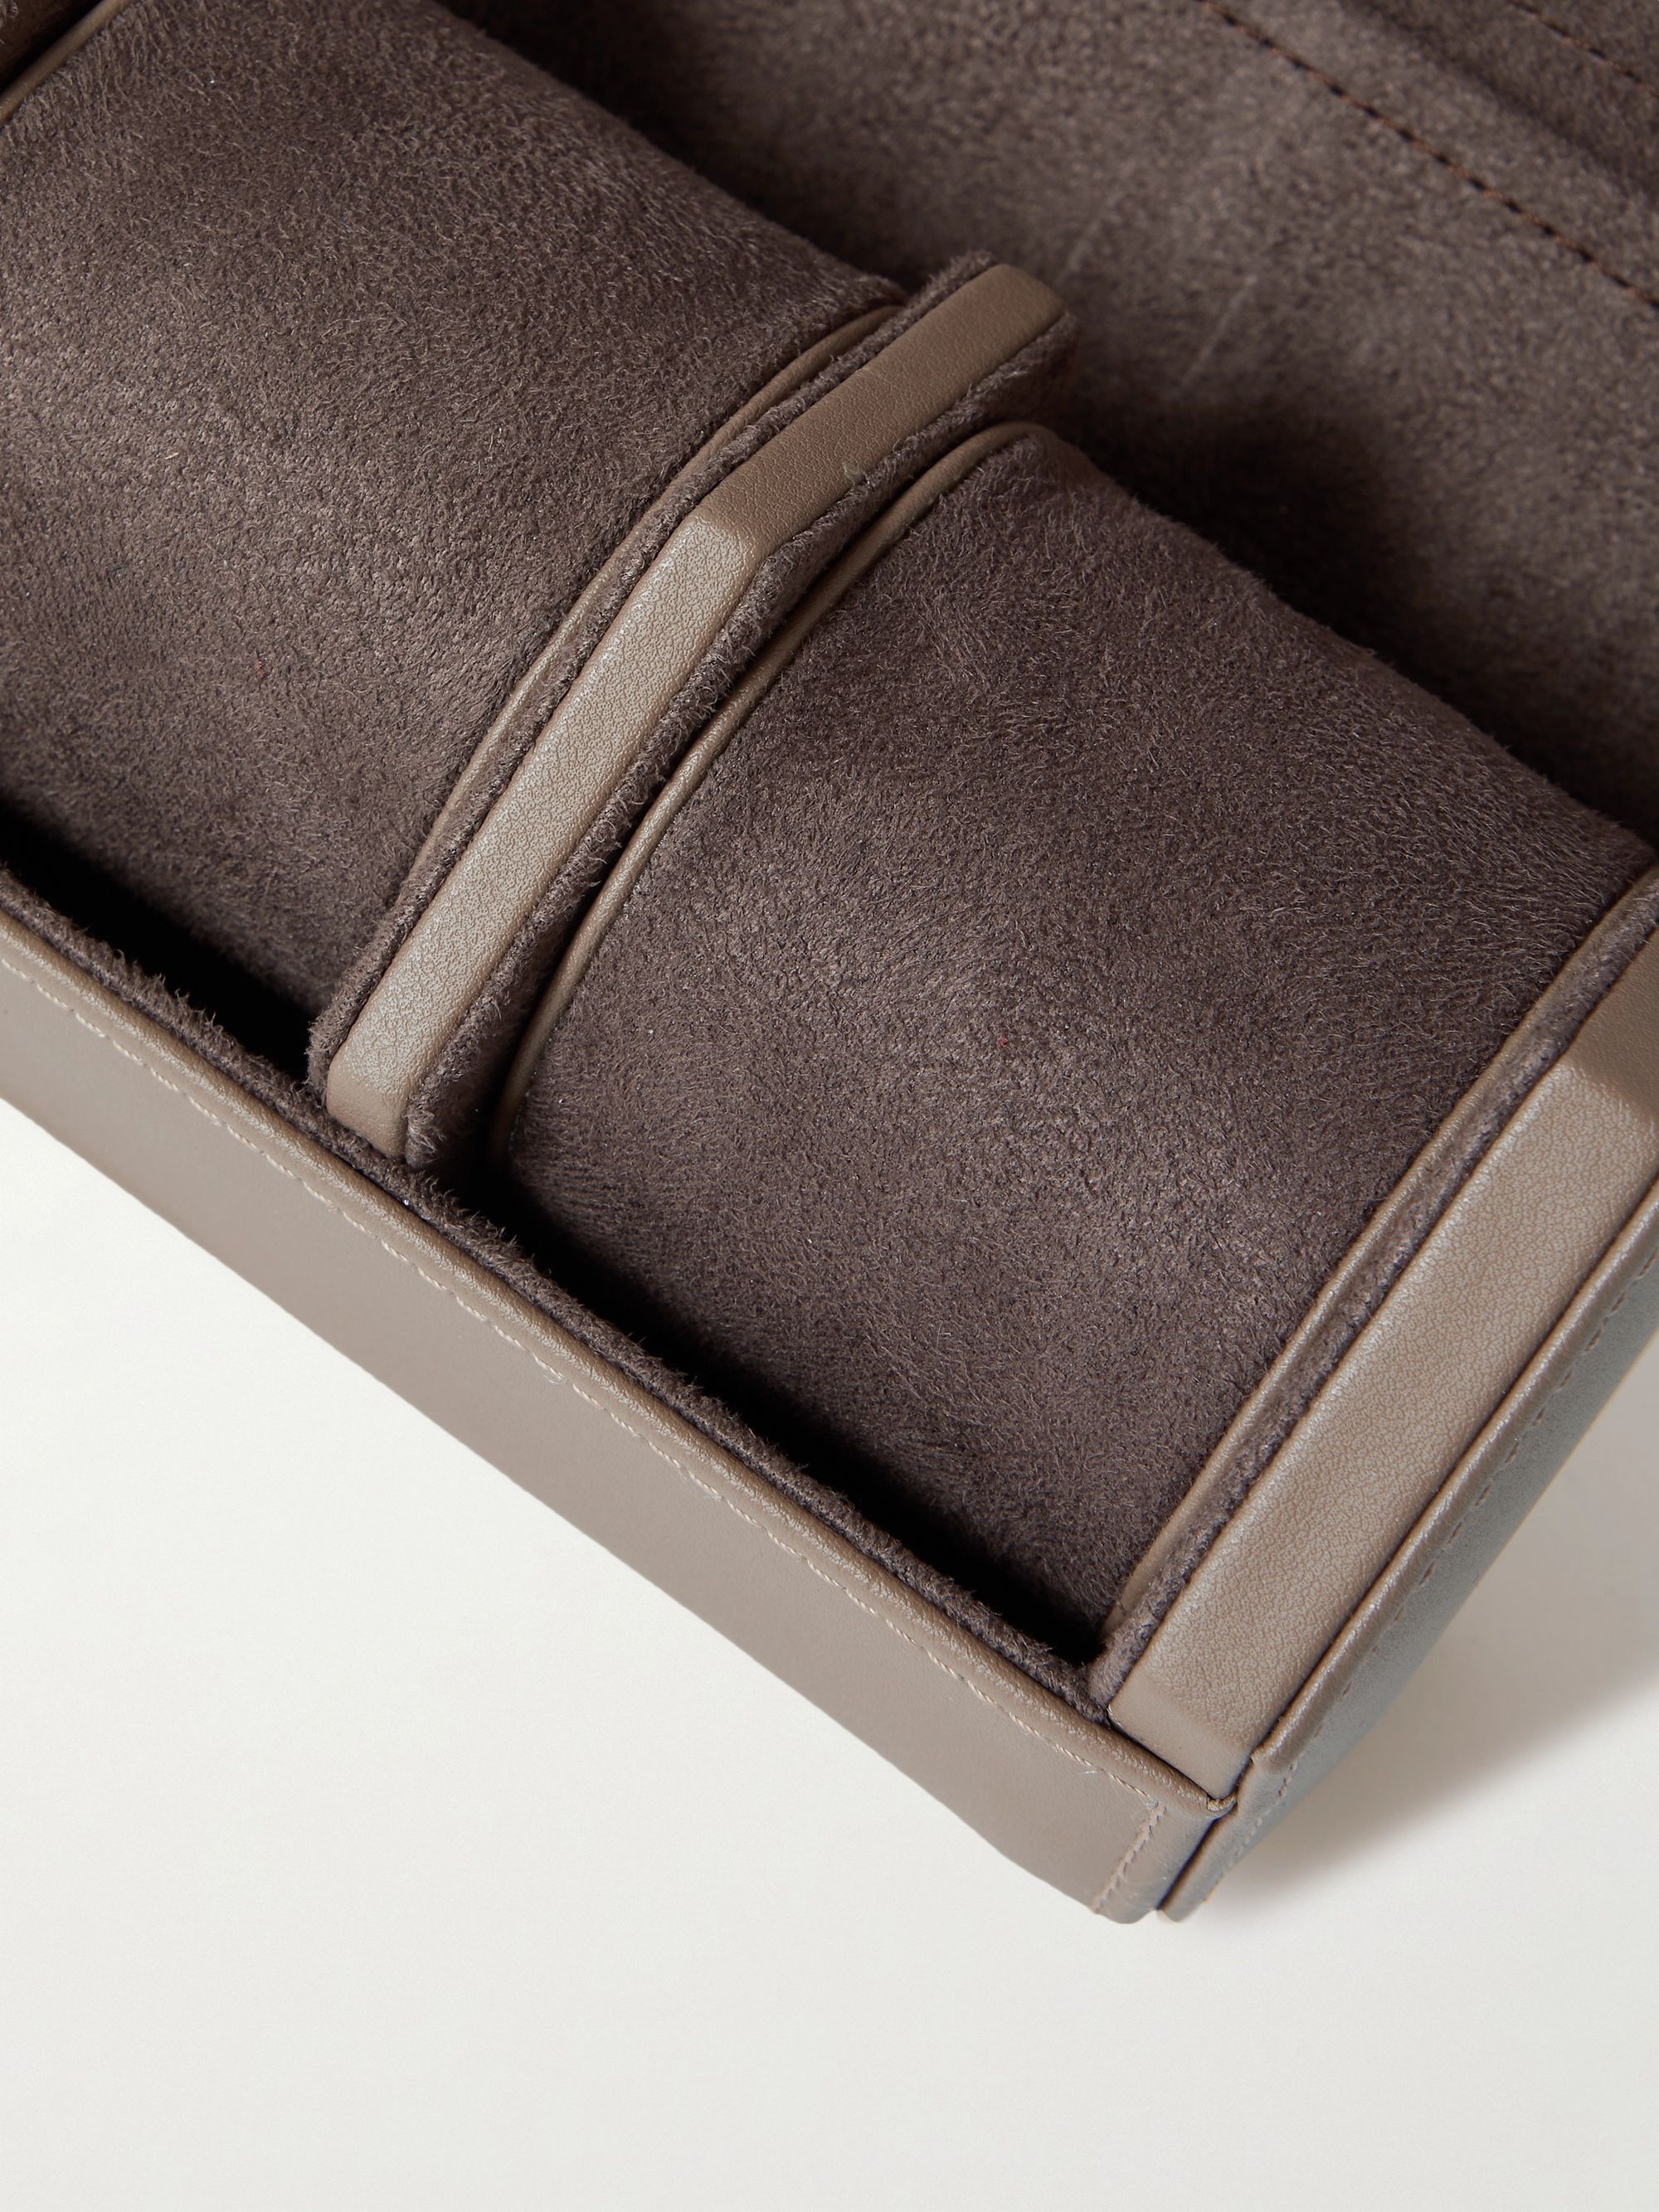 RAPPORT LONDON Vantage Leather Three-Watch Roll